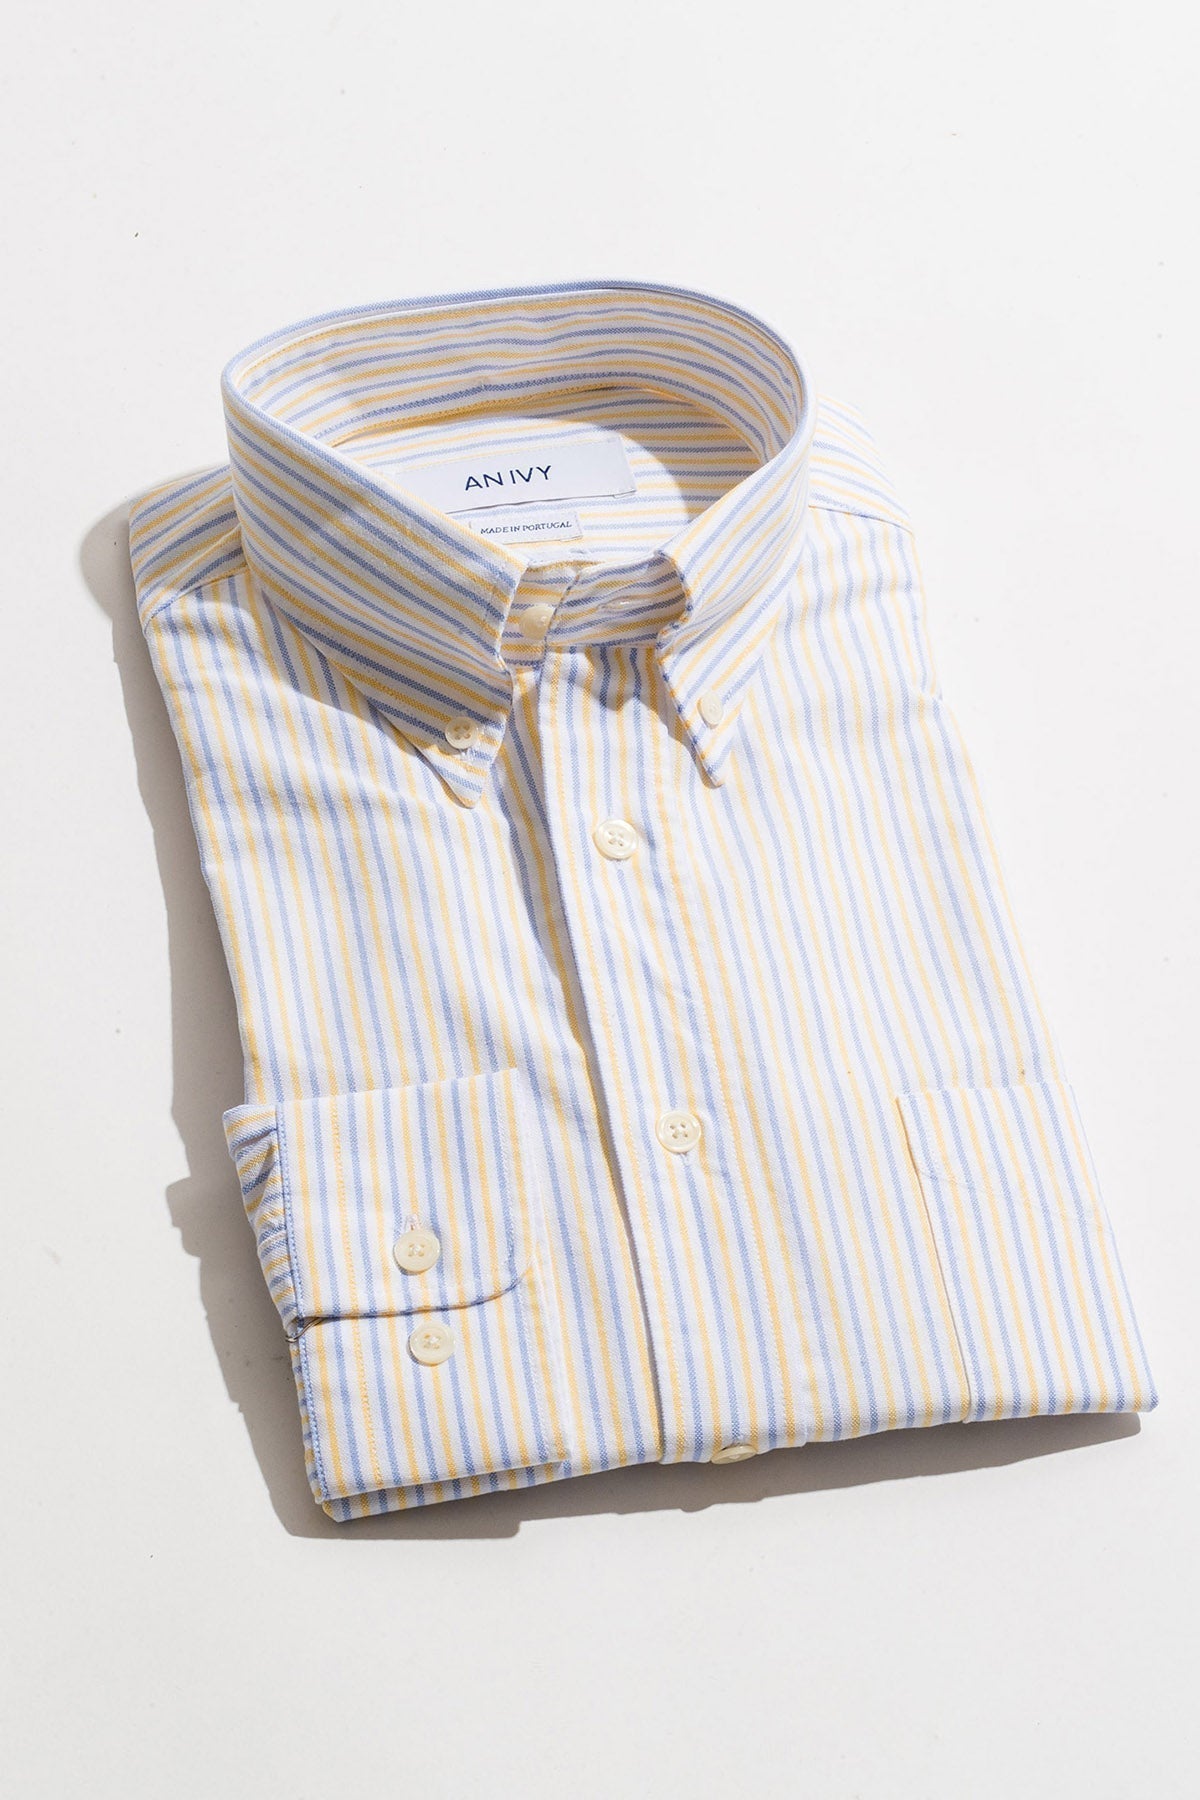 AN IVY Skjorte Yellow Blue Striped Oxford Shirt